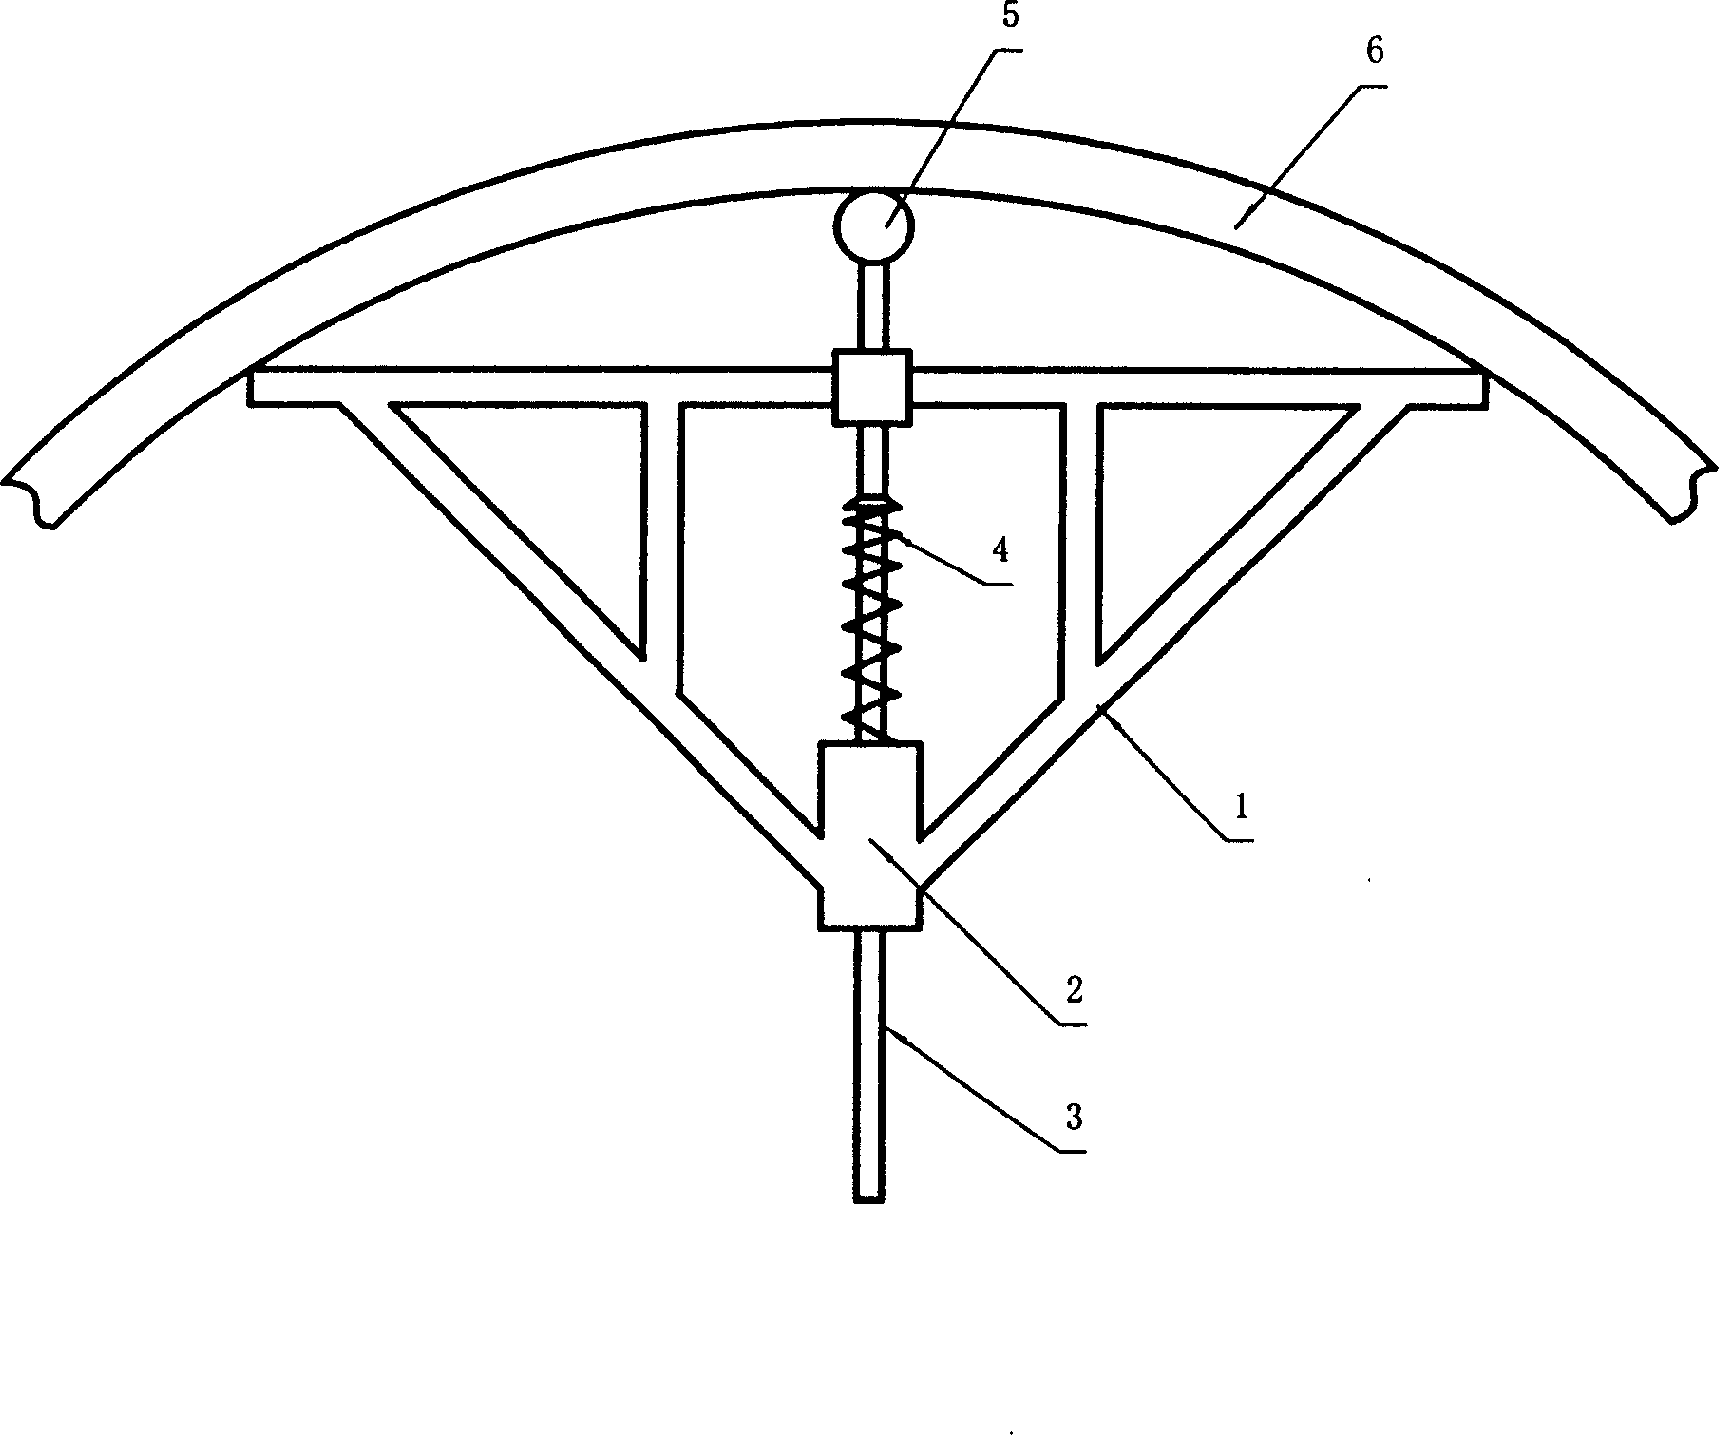 Curvature radius measuring method and apparatus therefor